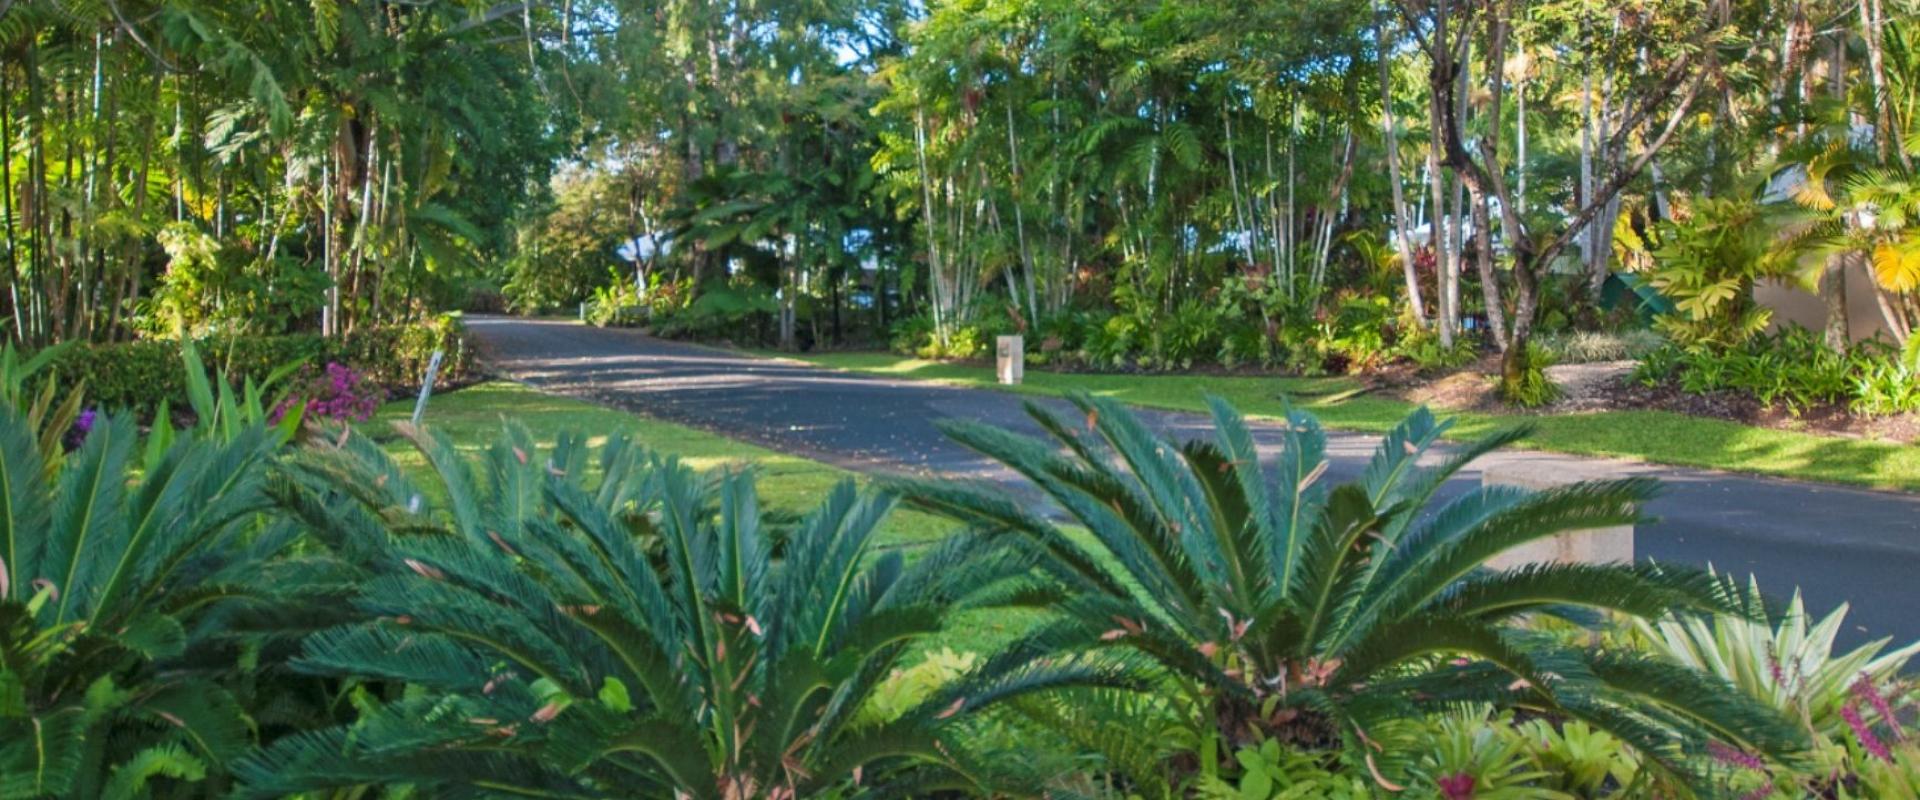 Mirage Villa 105 Bougainvillea Way South, Port Douglas SOLD by Tony McGrath Real Estate